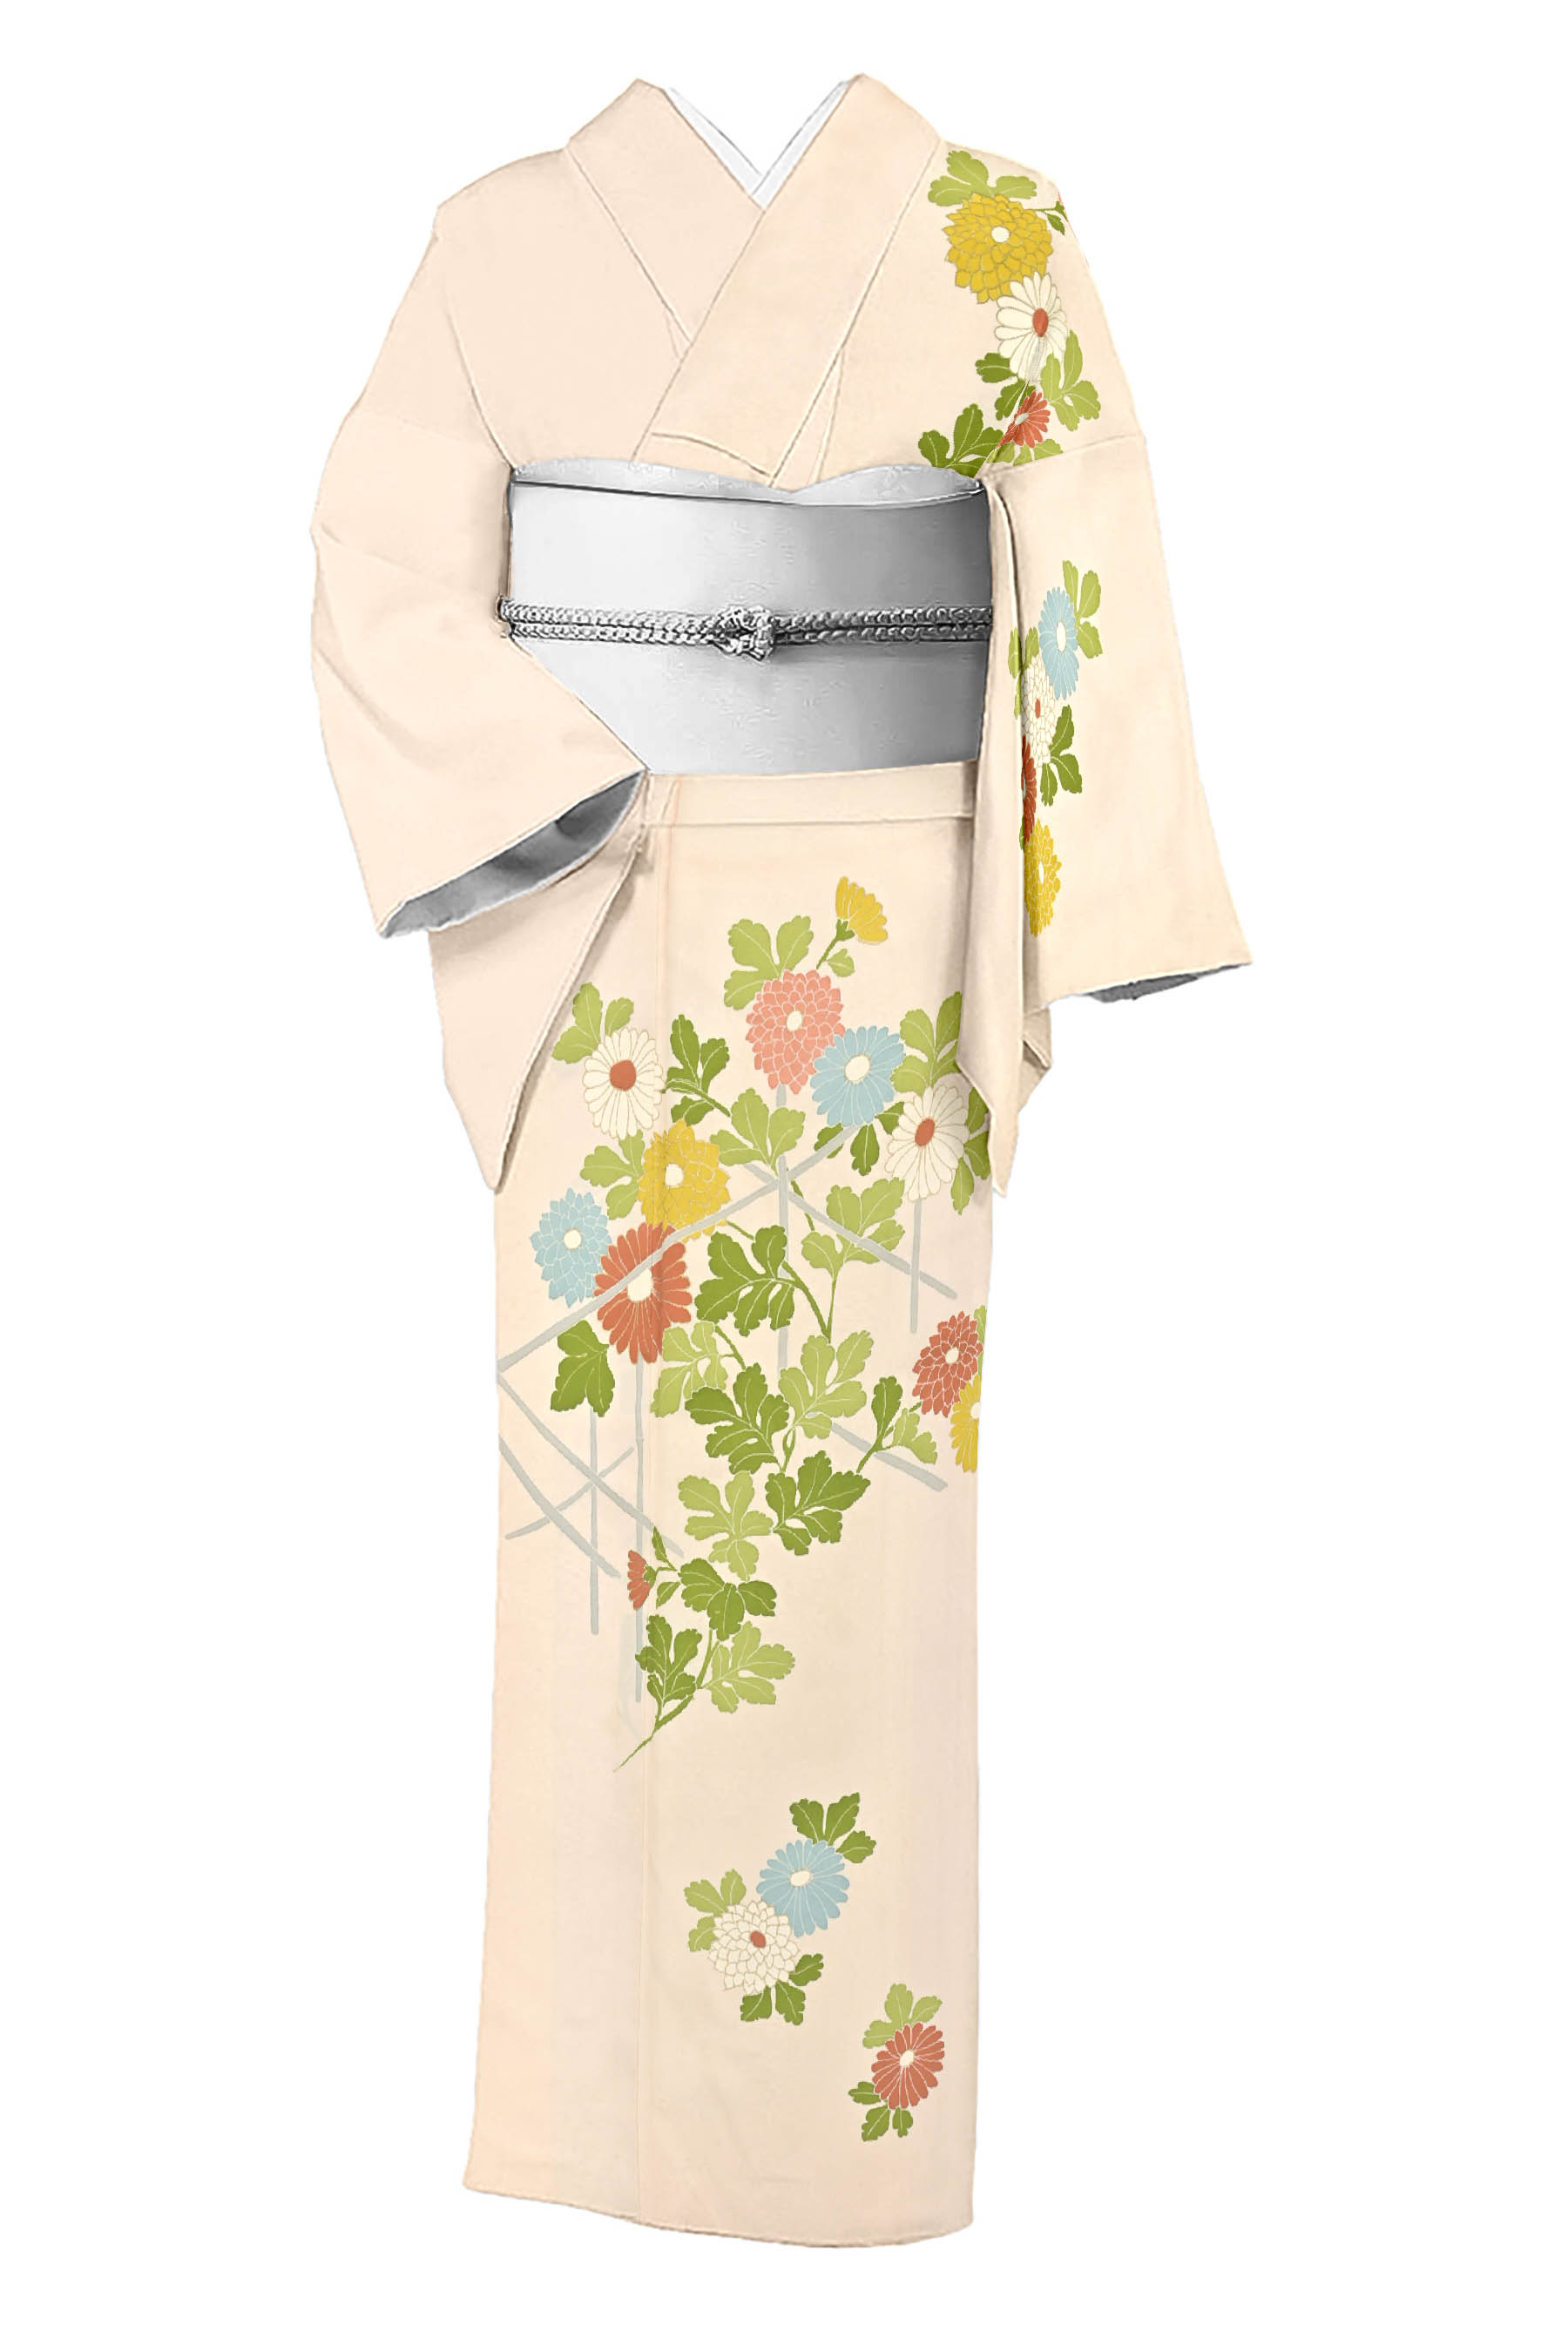 六花袋帯美品 正絹 刺繍 手縫い仕立て 着物 訪問着 K-44 - omegasoft.co.id